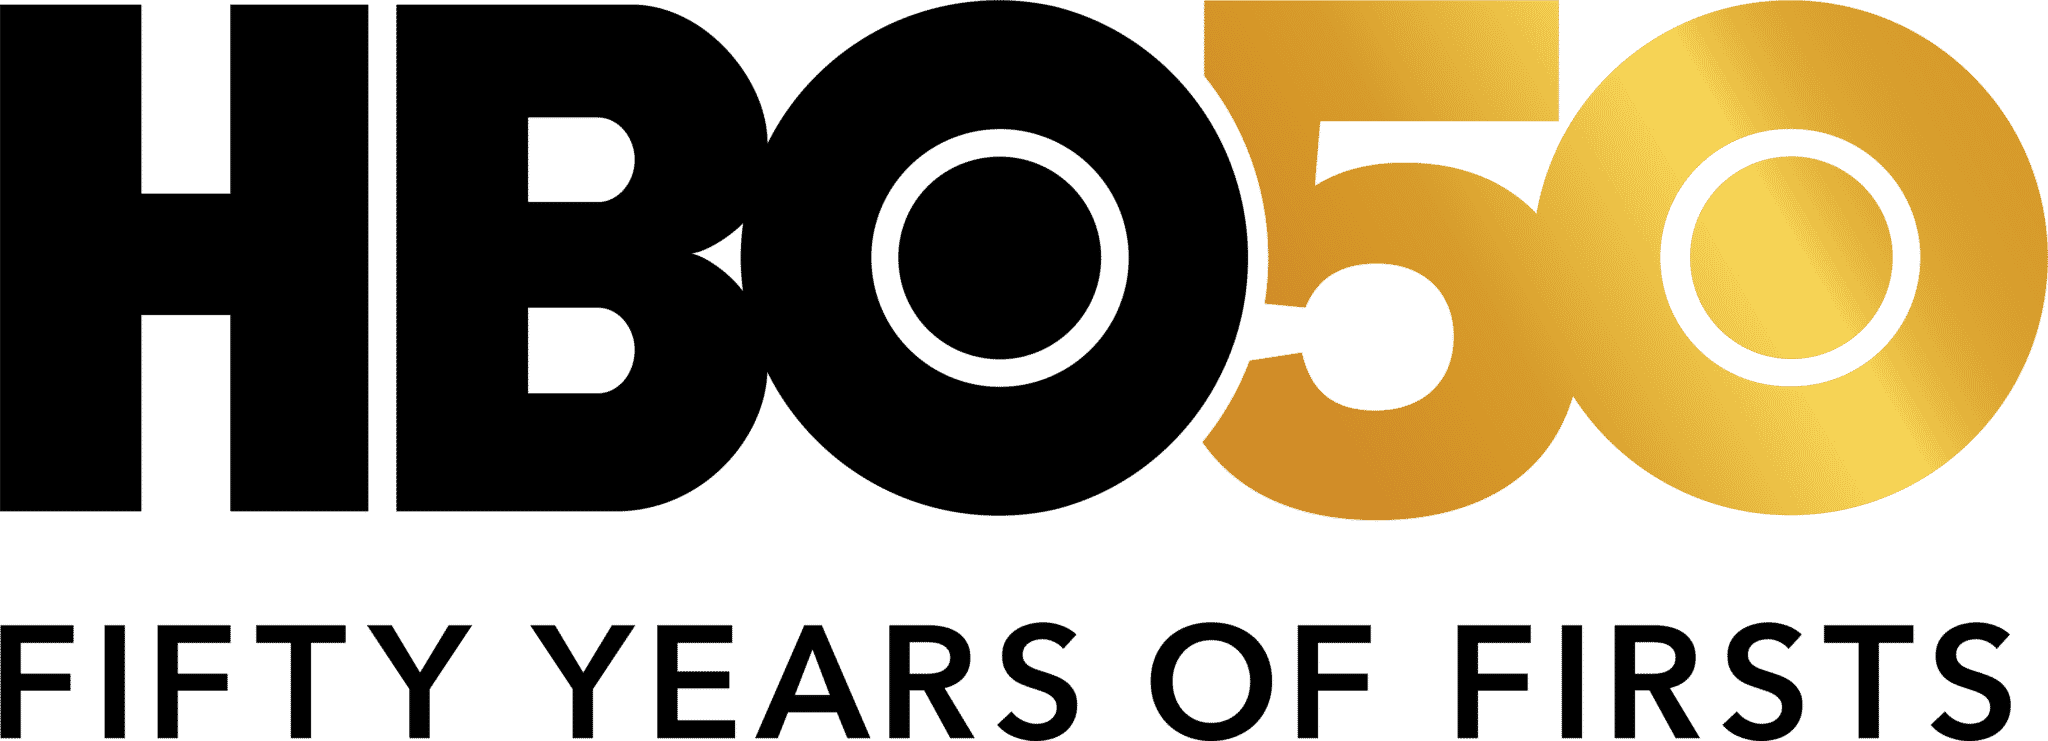 - HBO50 Campaign Logos - ภาพที่ 7